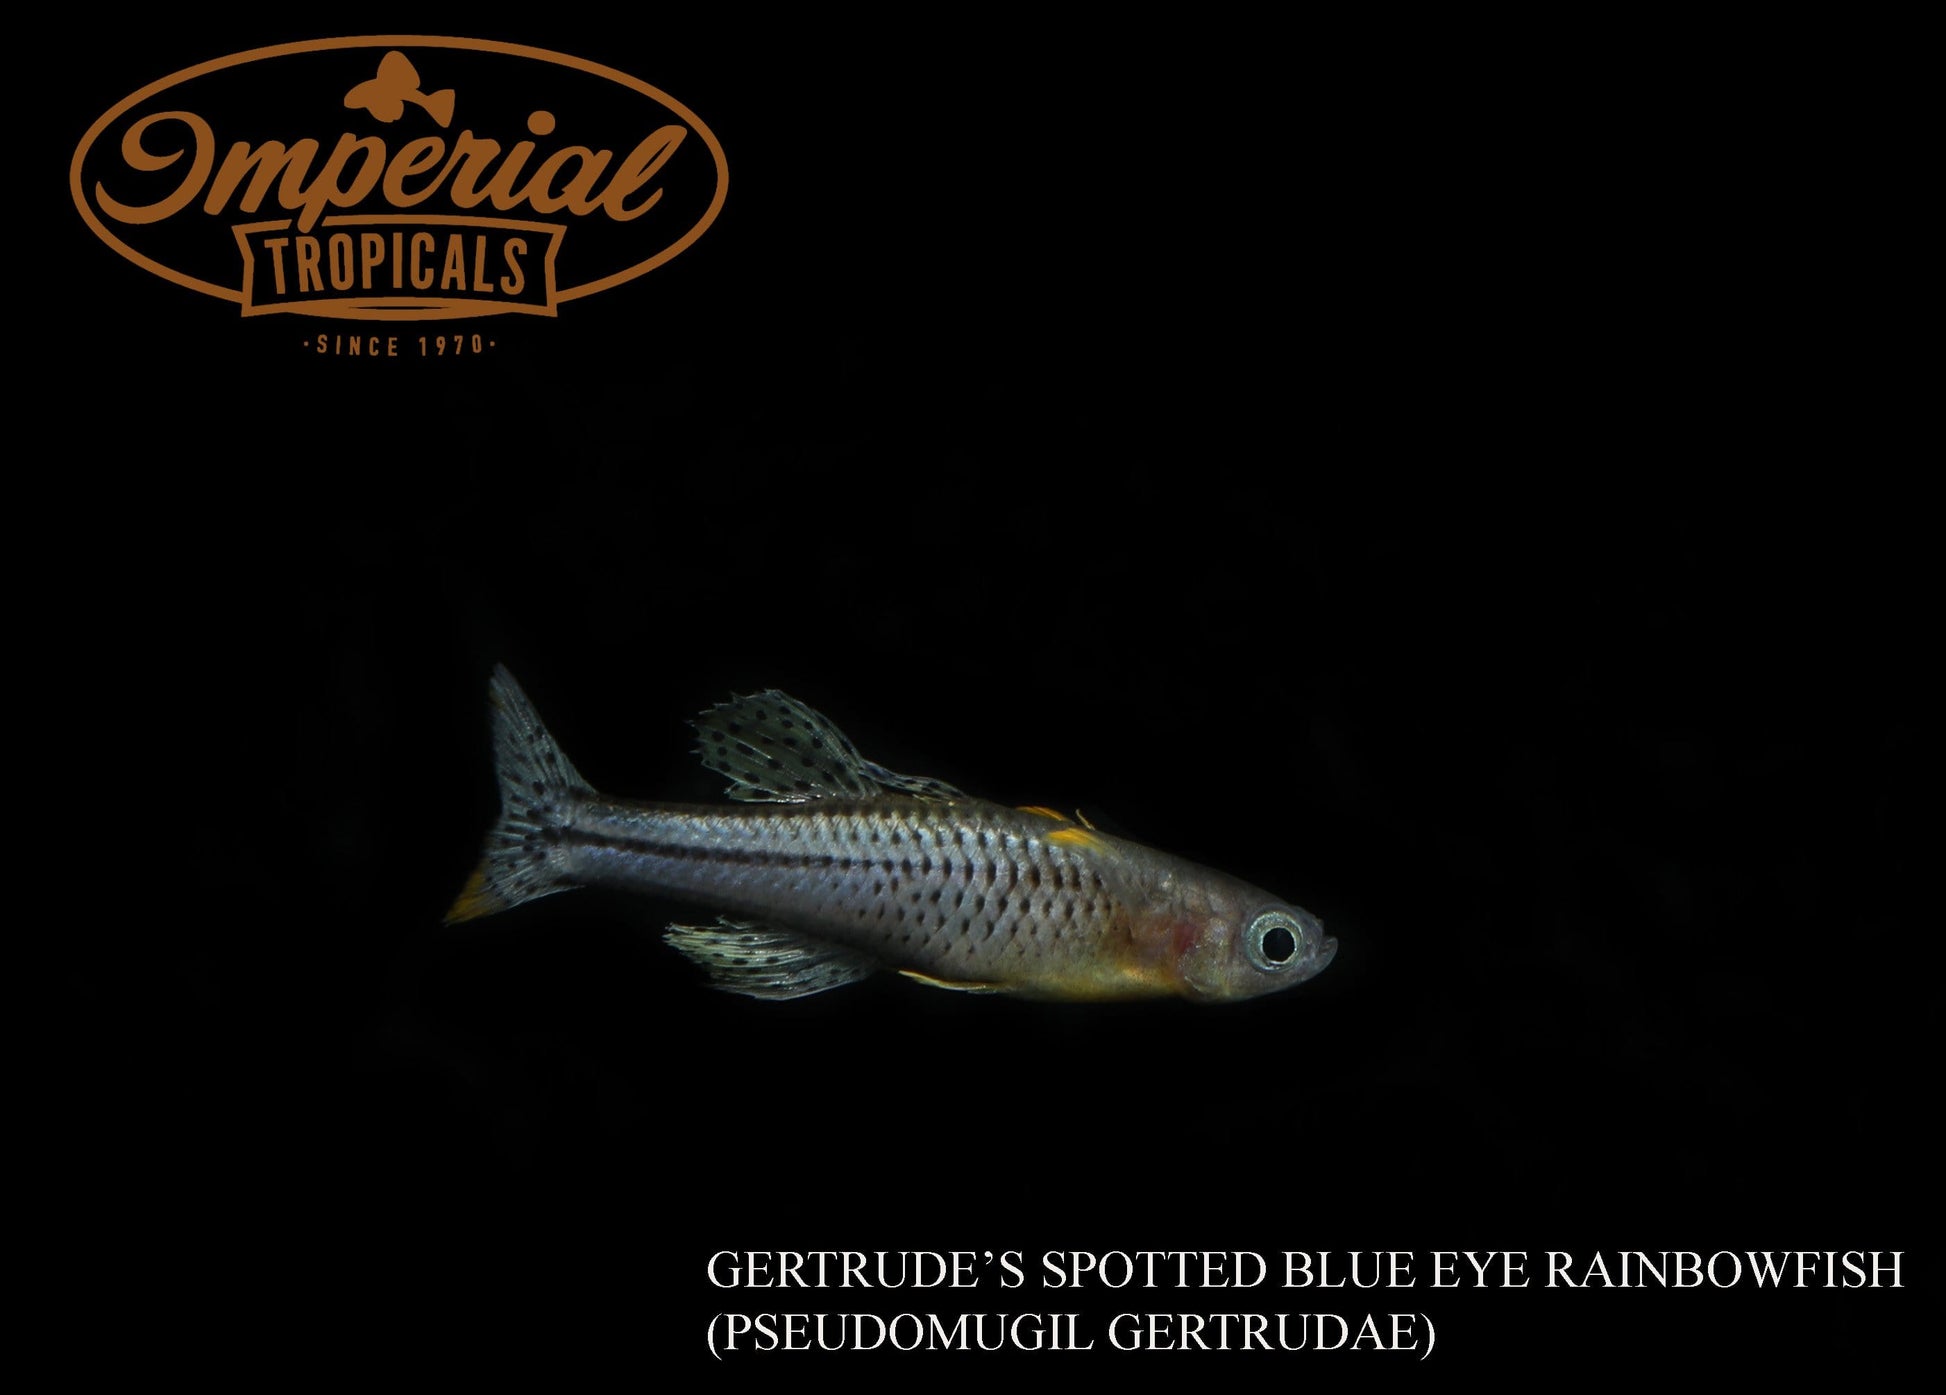 Spotted Aru II Blue-Eye (Pseudomugil gertrudae) - Imperial Tropicals